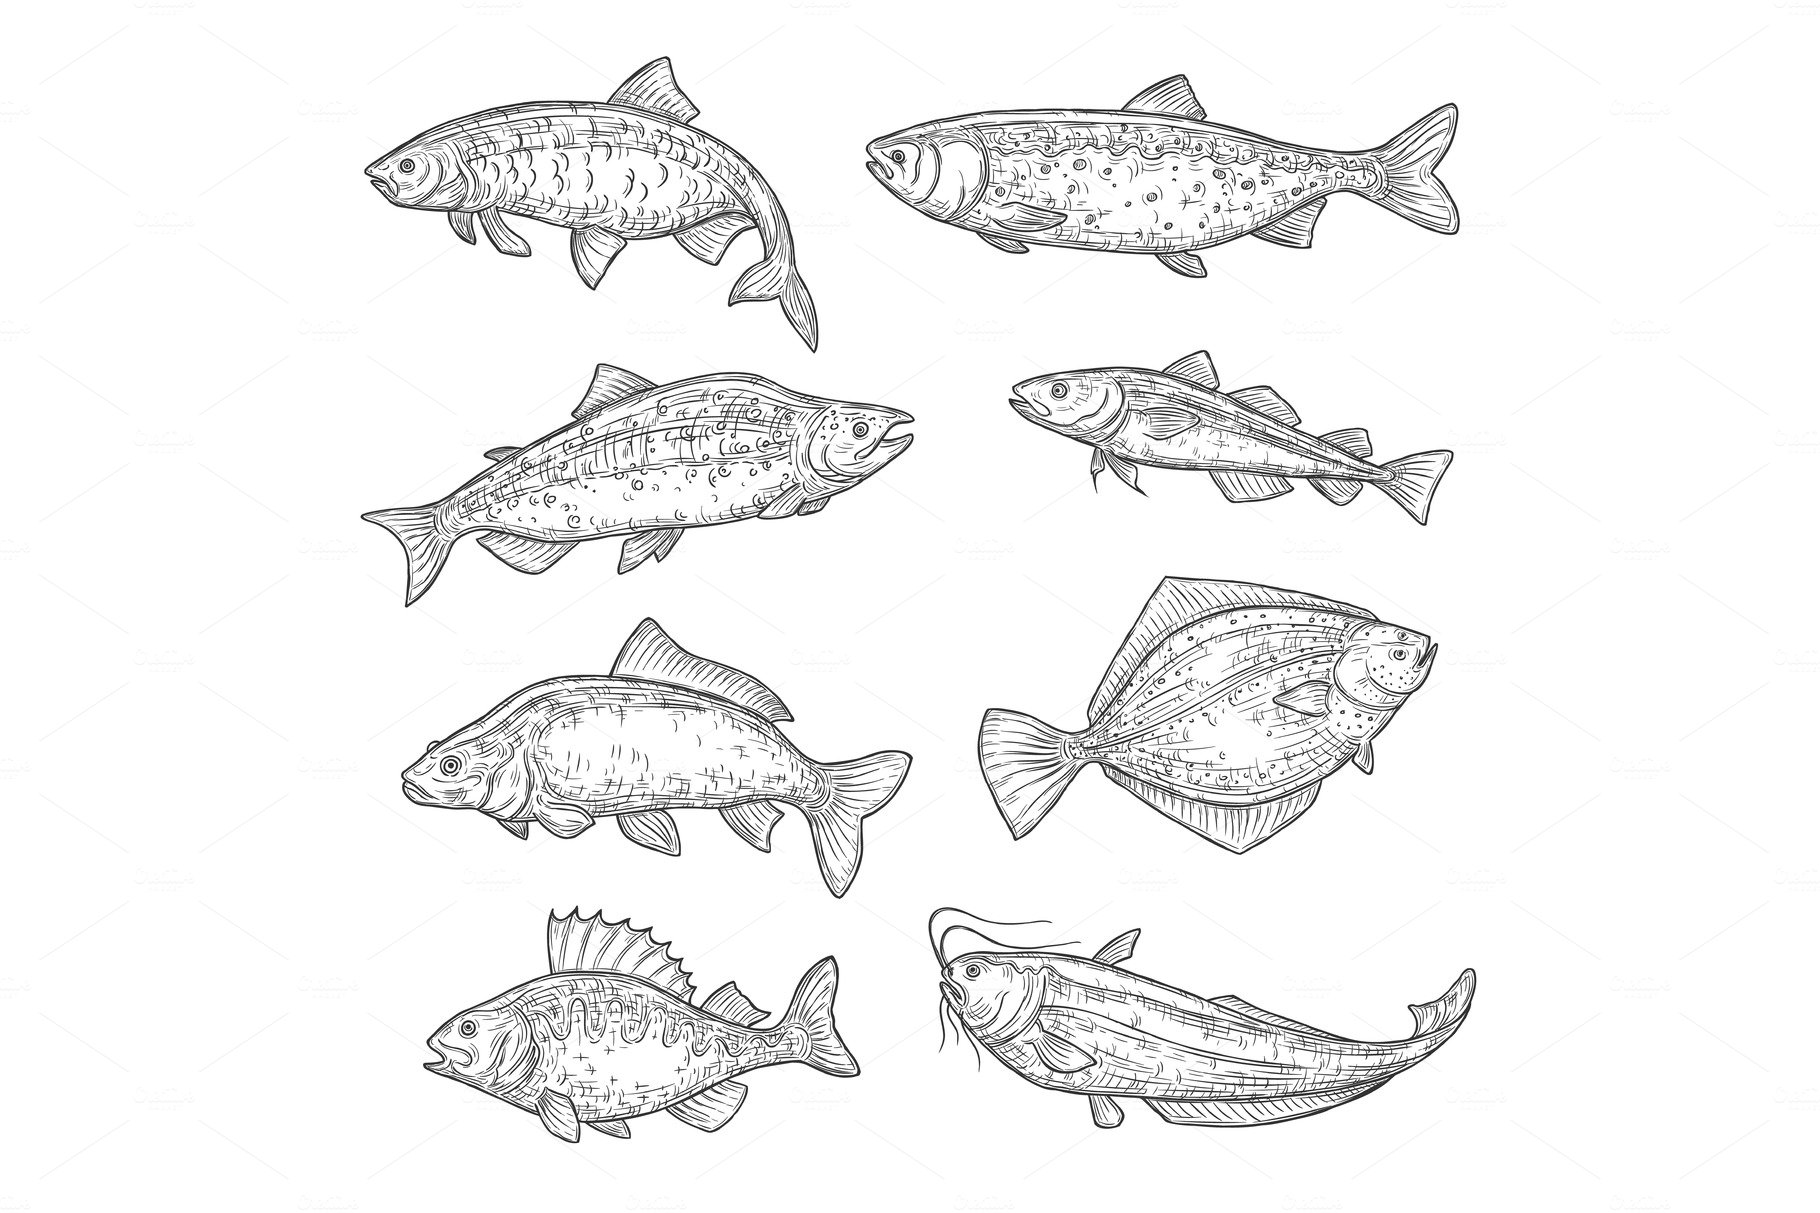 Salmon, carp, tuna and sheatfish cover image.